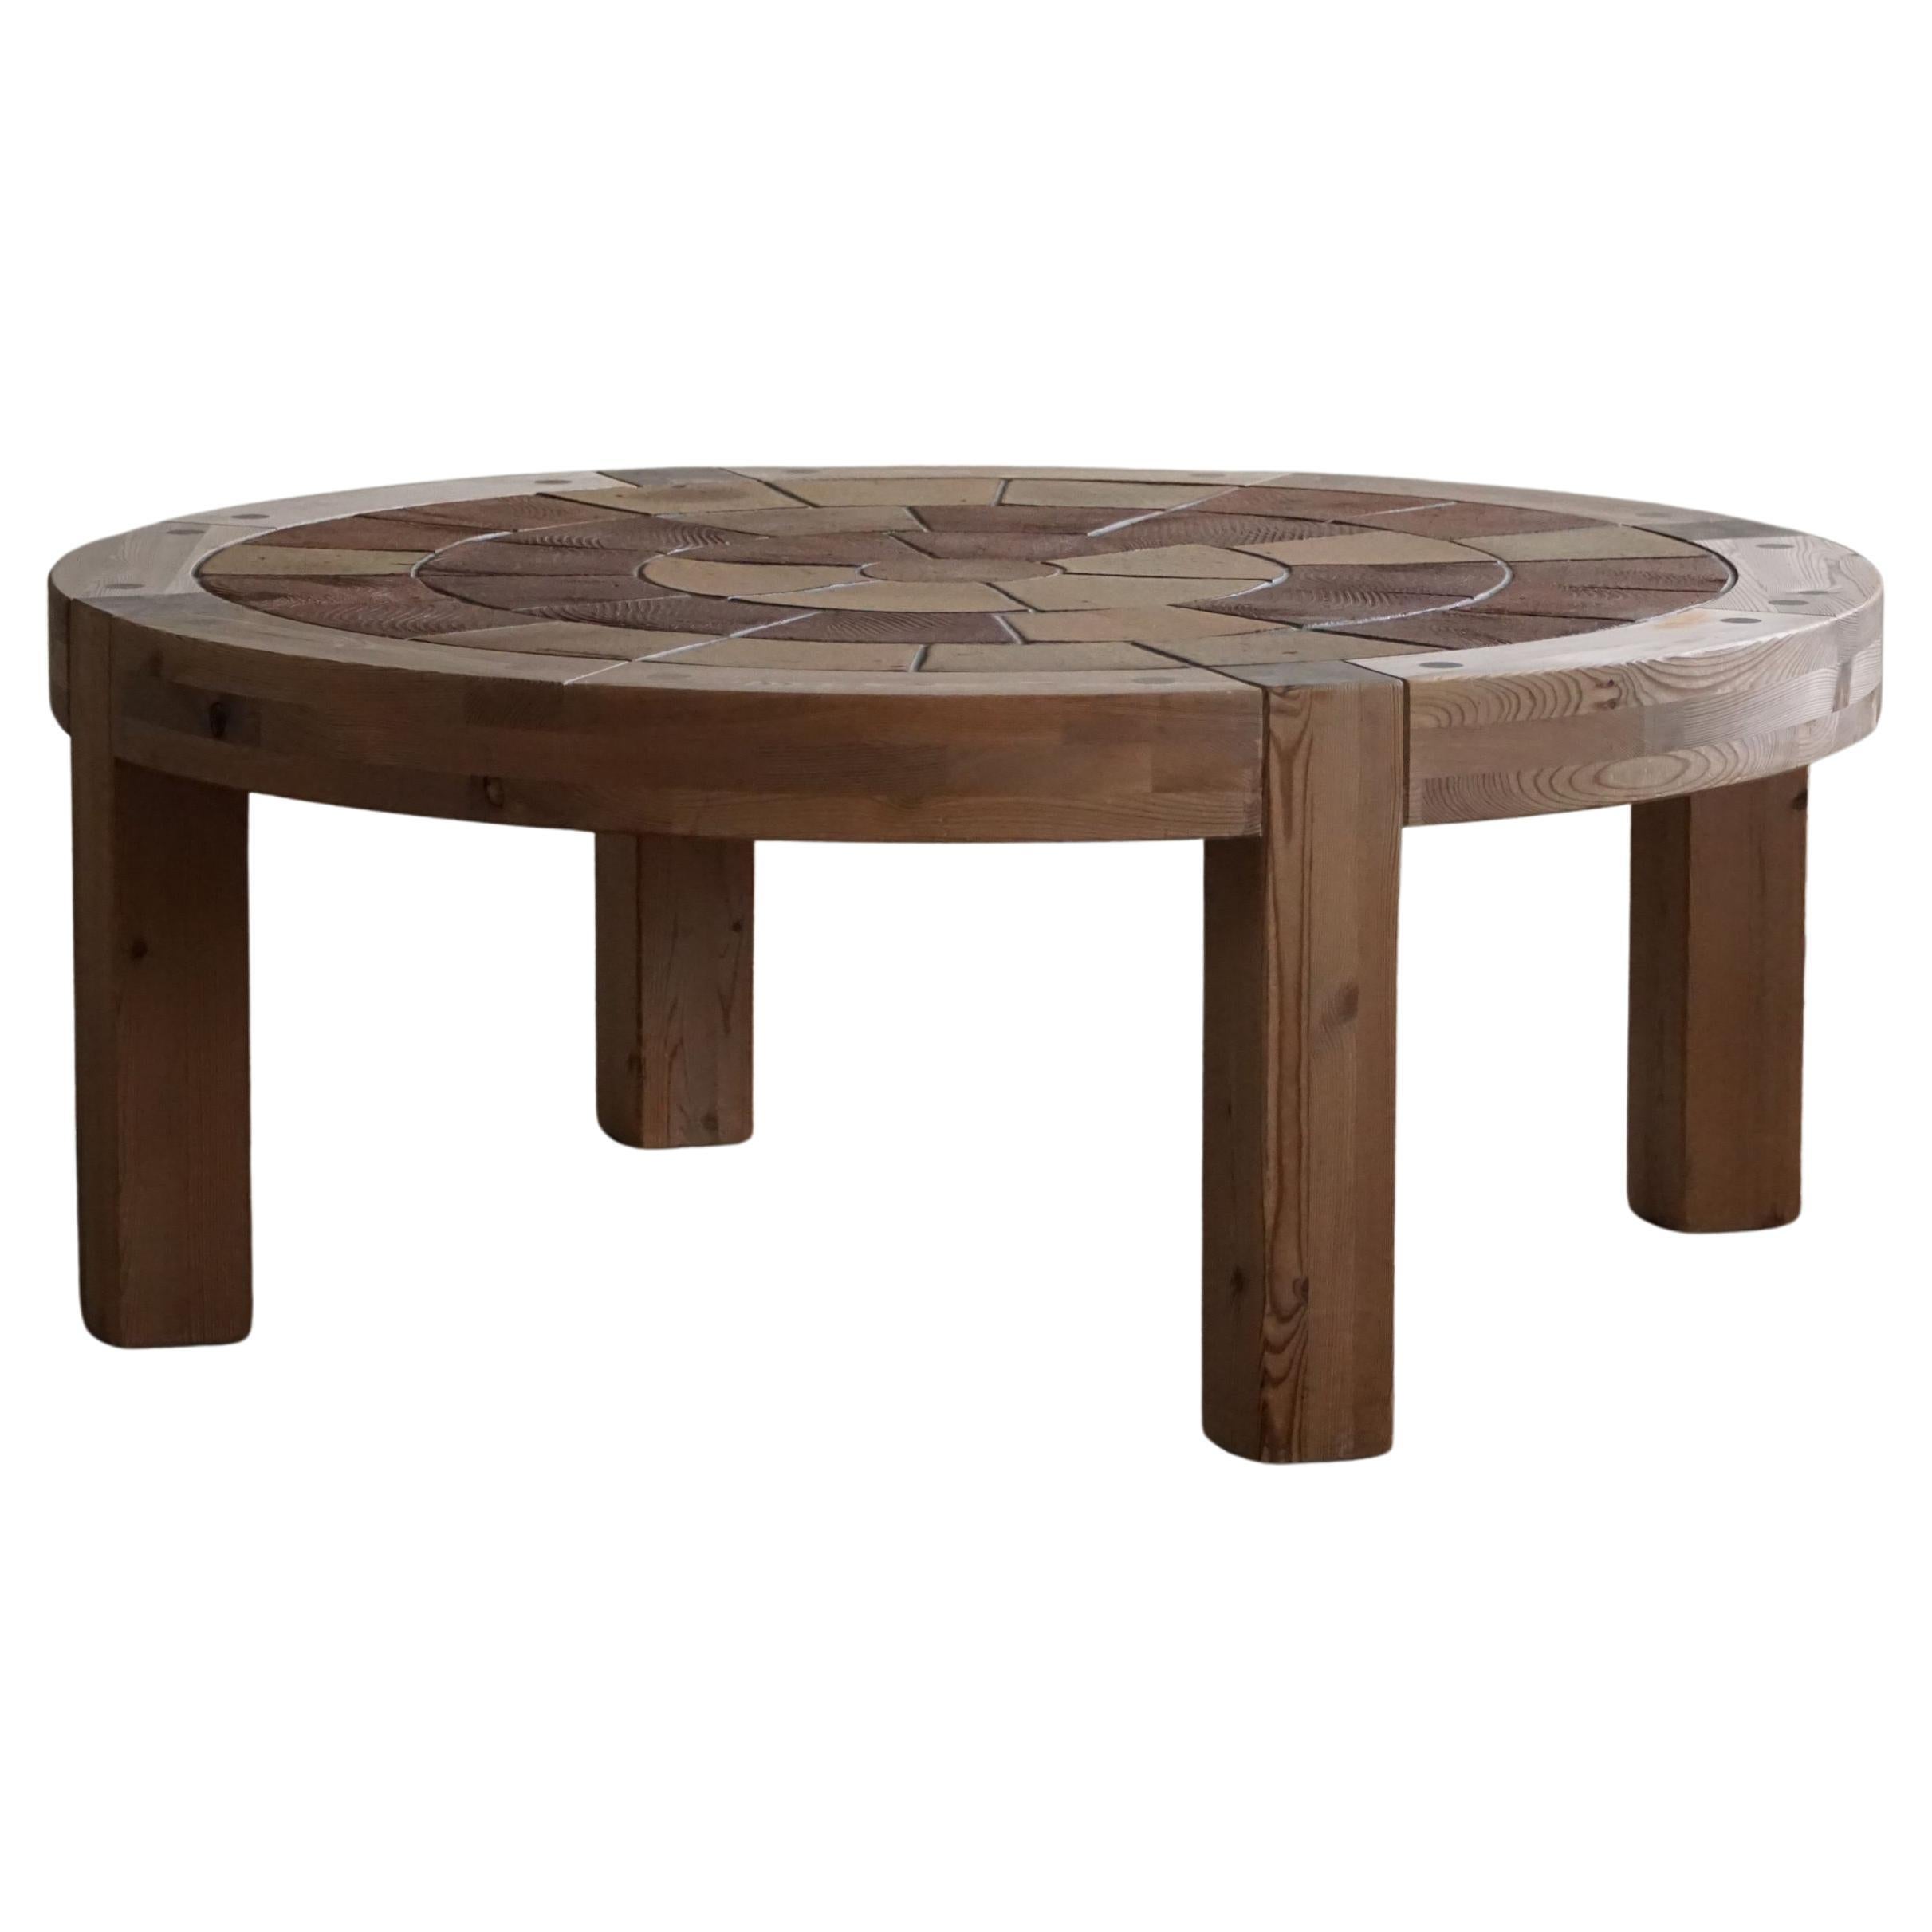 Sallingboe, Large Round Coffee Table in Pine & Ceramic, Danish Design, 1970s For Sale